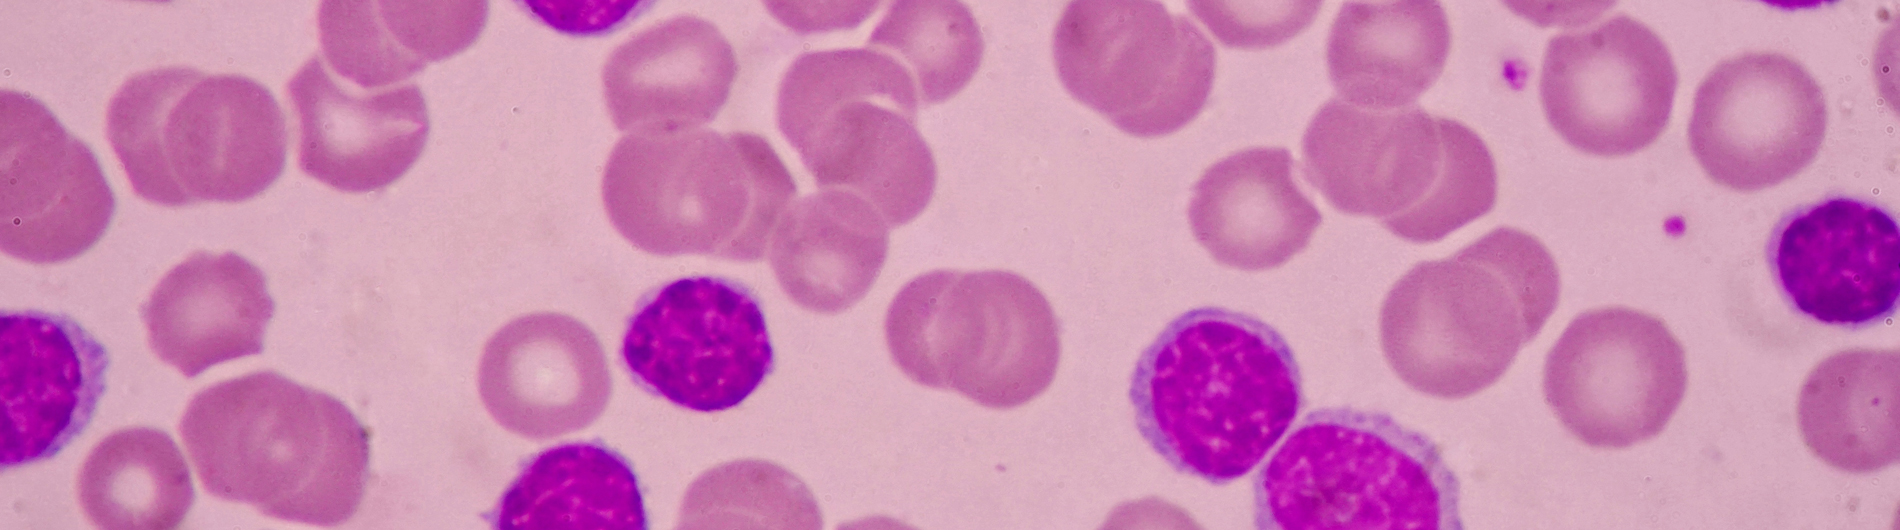 Leukemia Cells